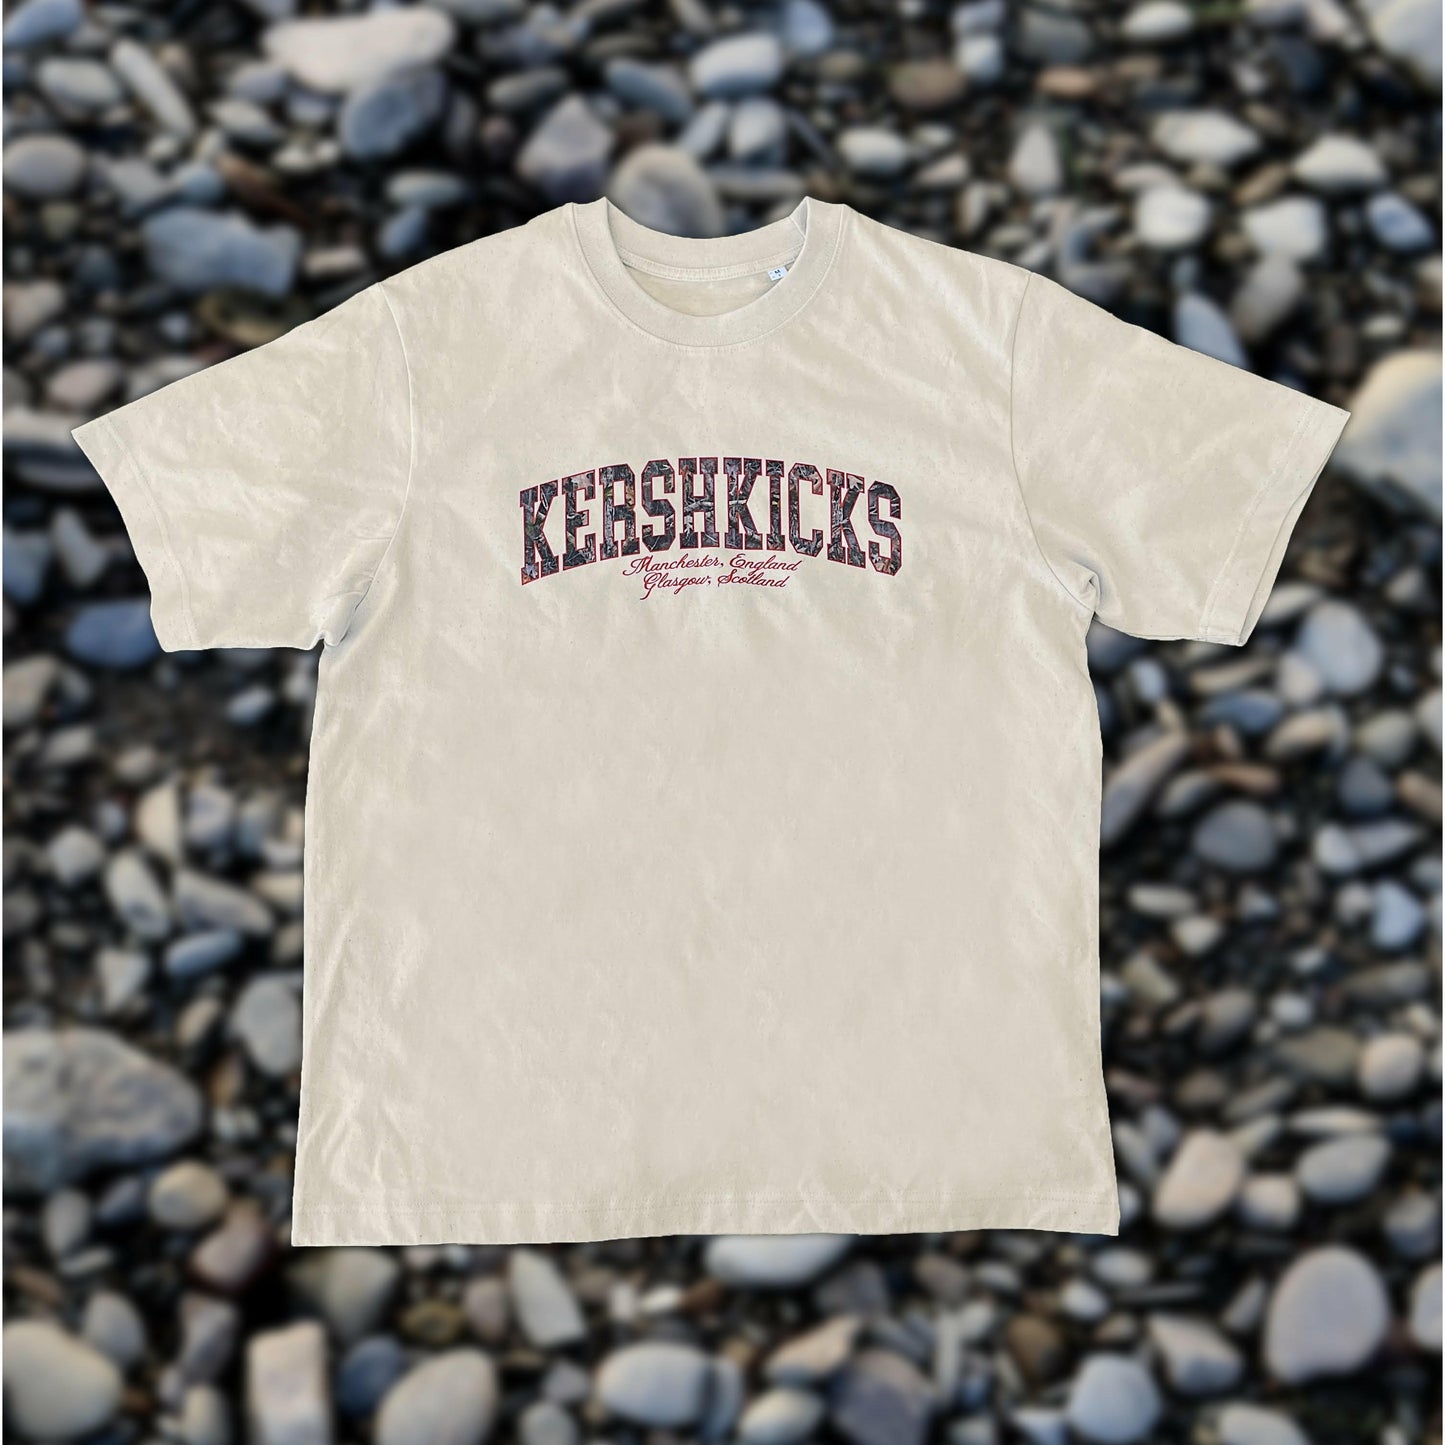 KERSHKICKS CAMO TEE by KershKicks from £30.00